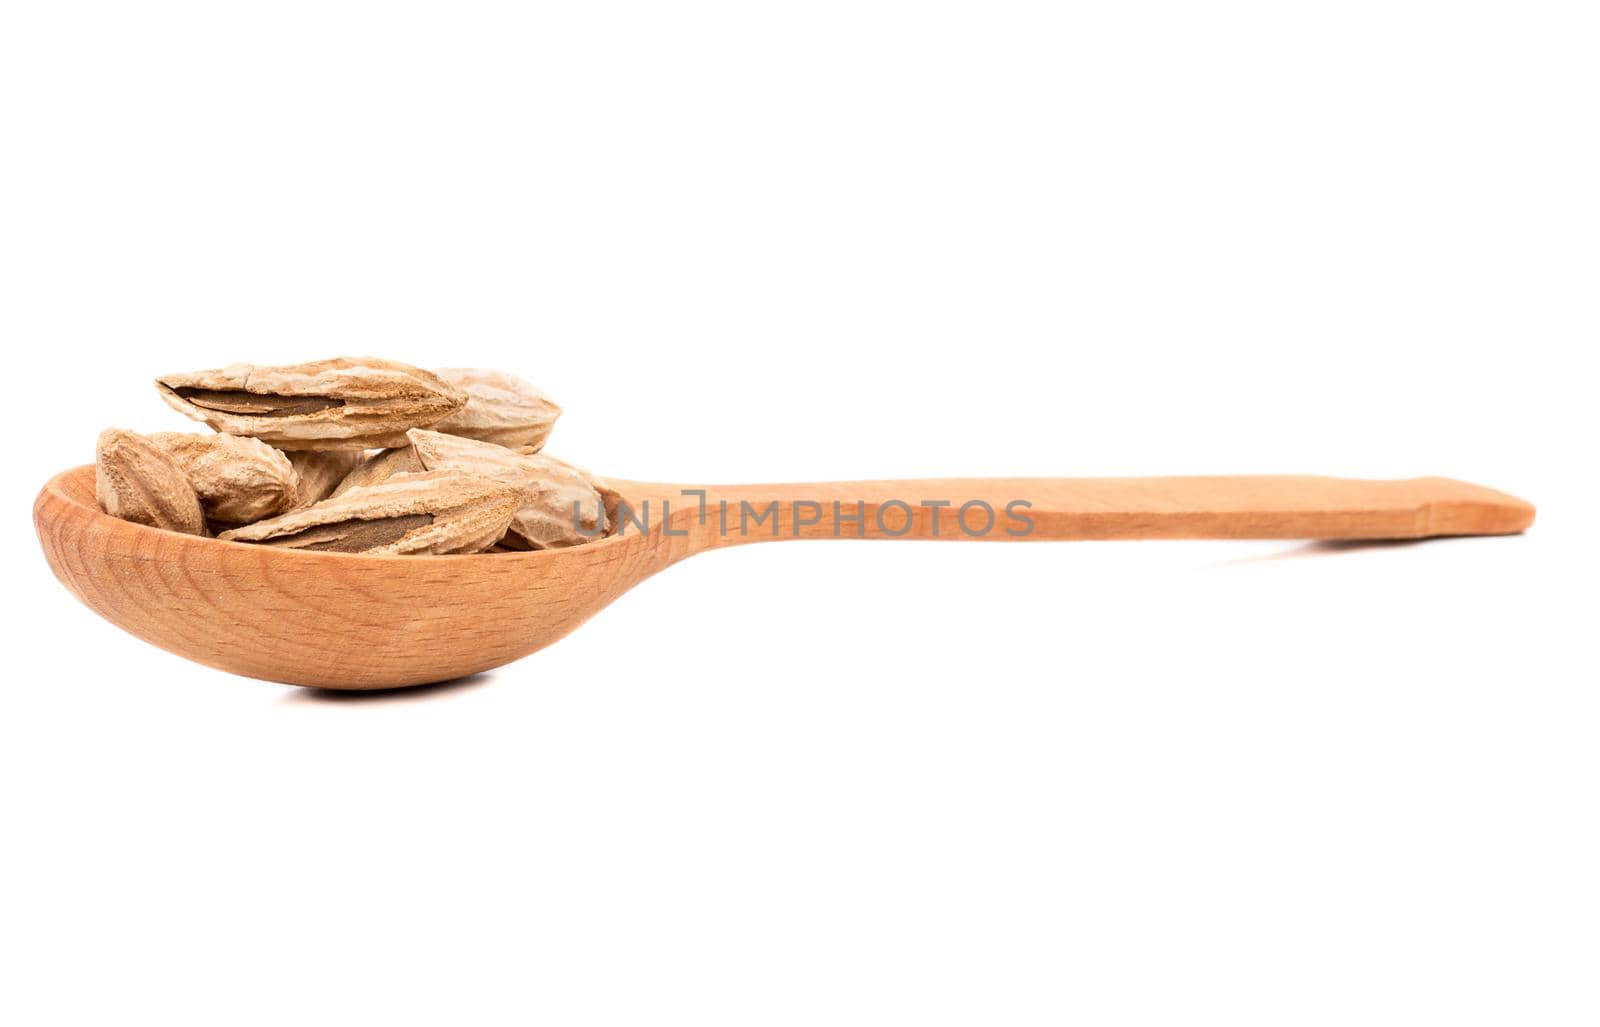 Wild uzbek almonds in a wooden spoon on a white background